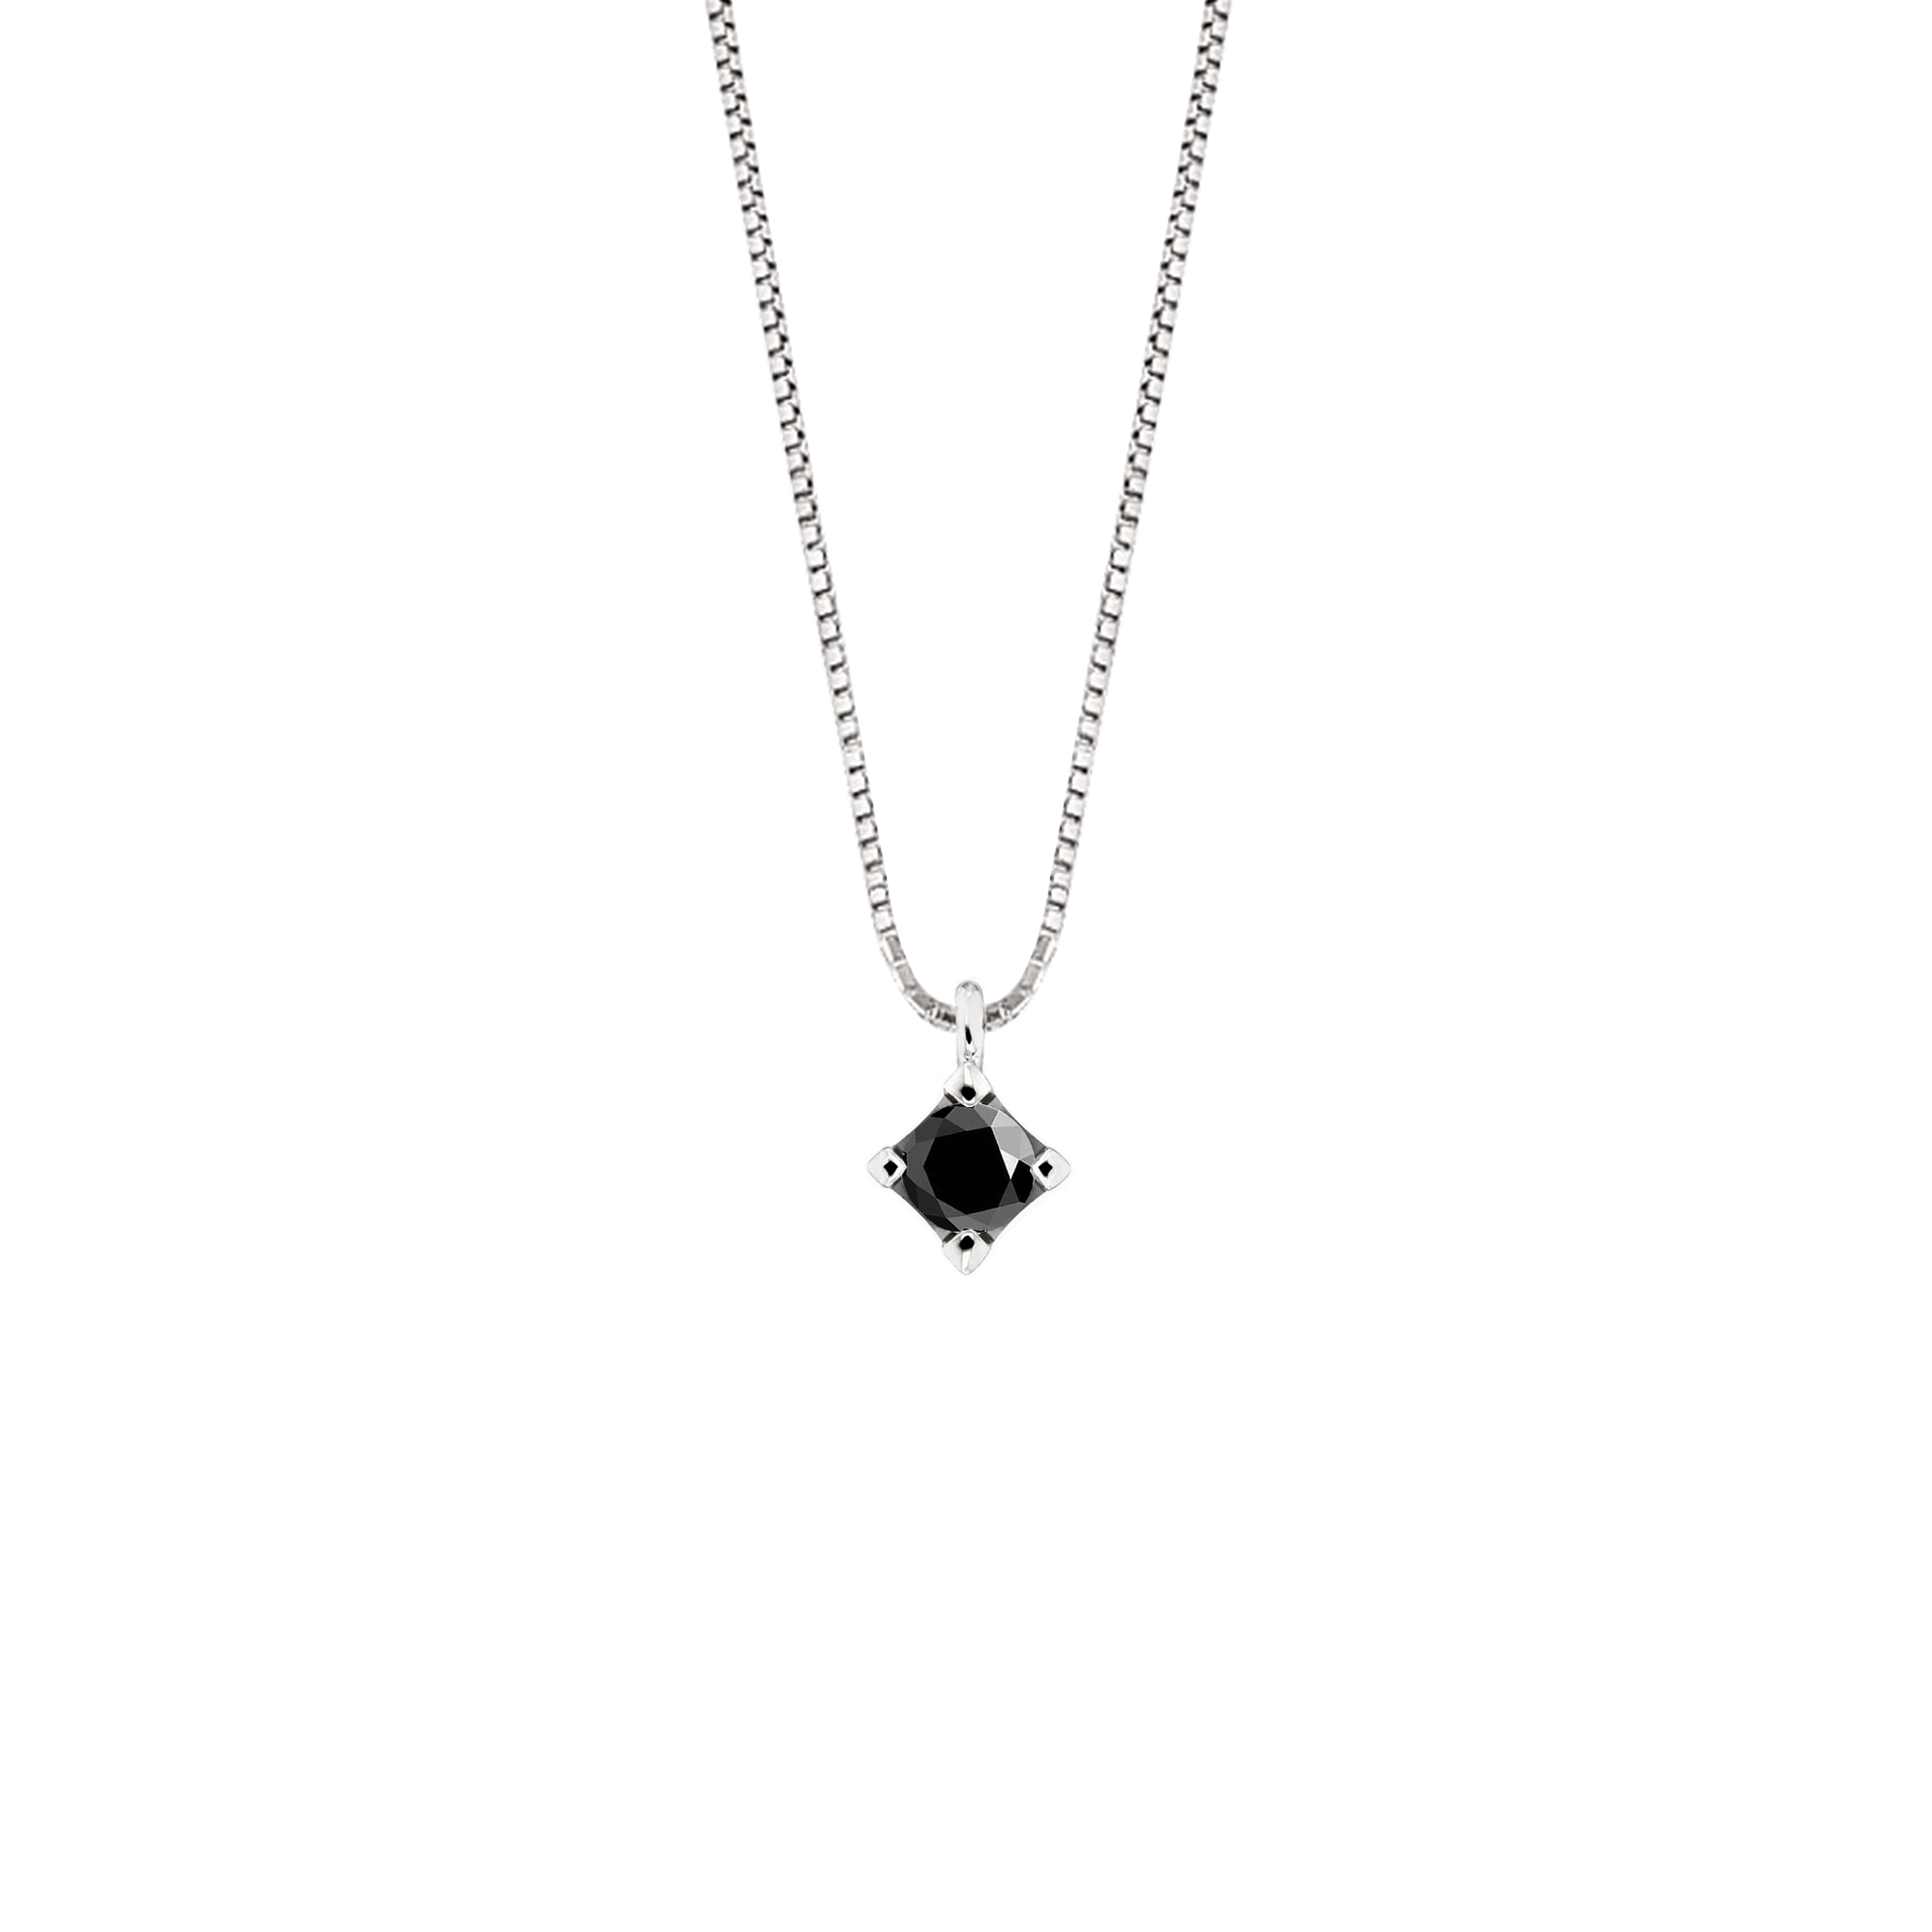 Lantisor din aur 18K cu pandantiv cu diamant negru 0,15 ct., model Orsini CI1393N-15